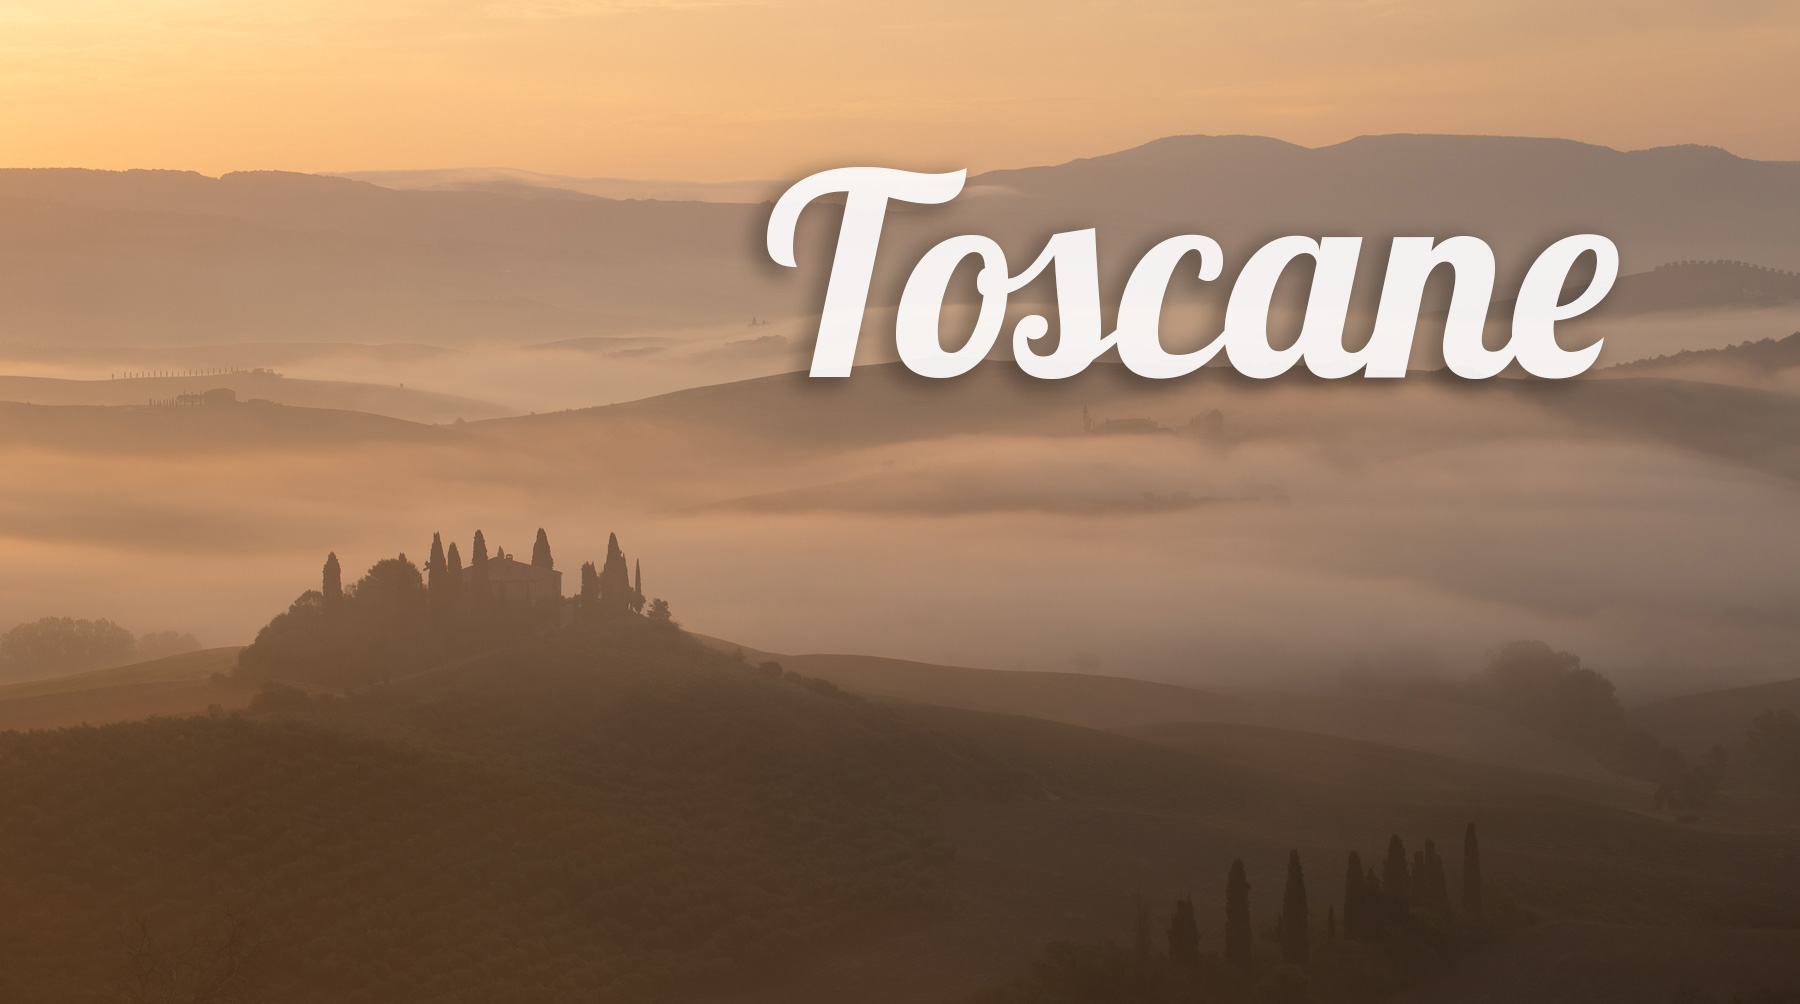 toscane italie duchats blog vacances voyage